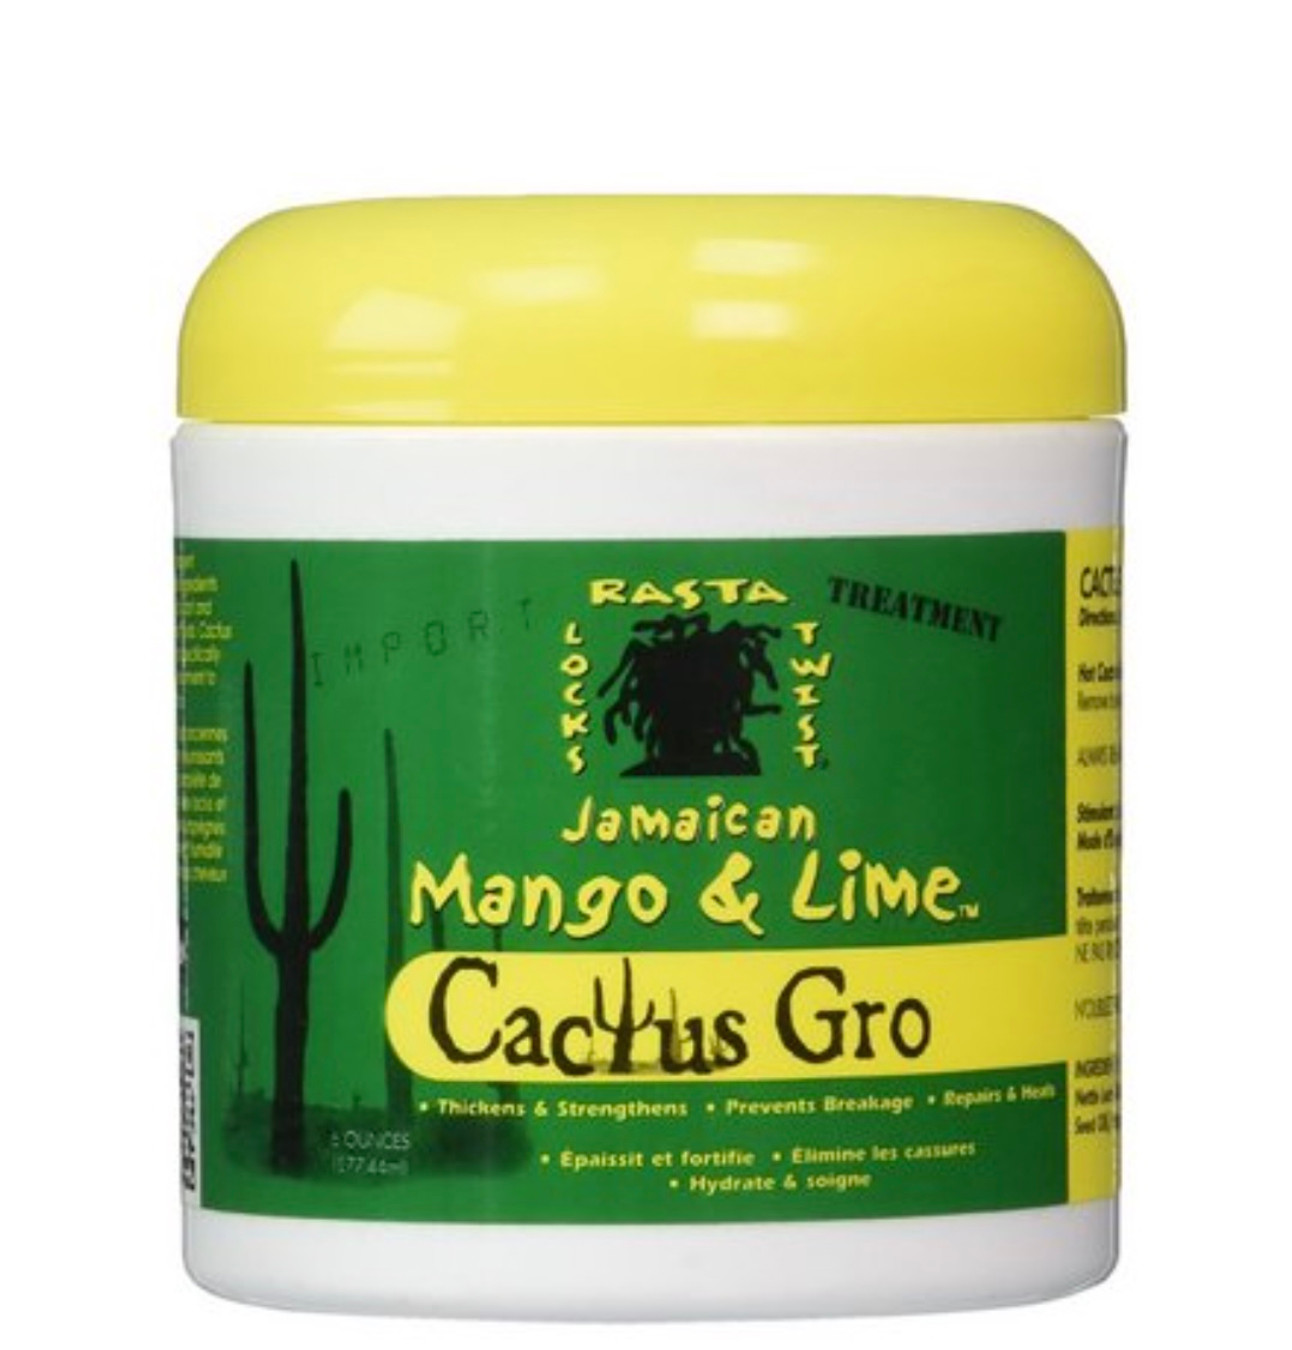 Jamaican Mango and Lime Cactus Gro Hair Treatment